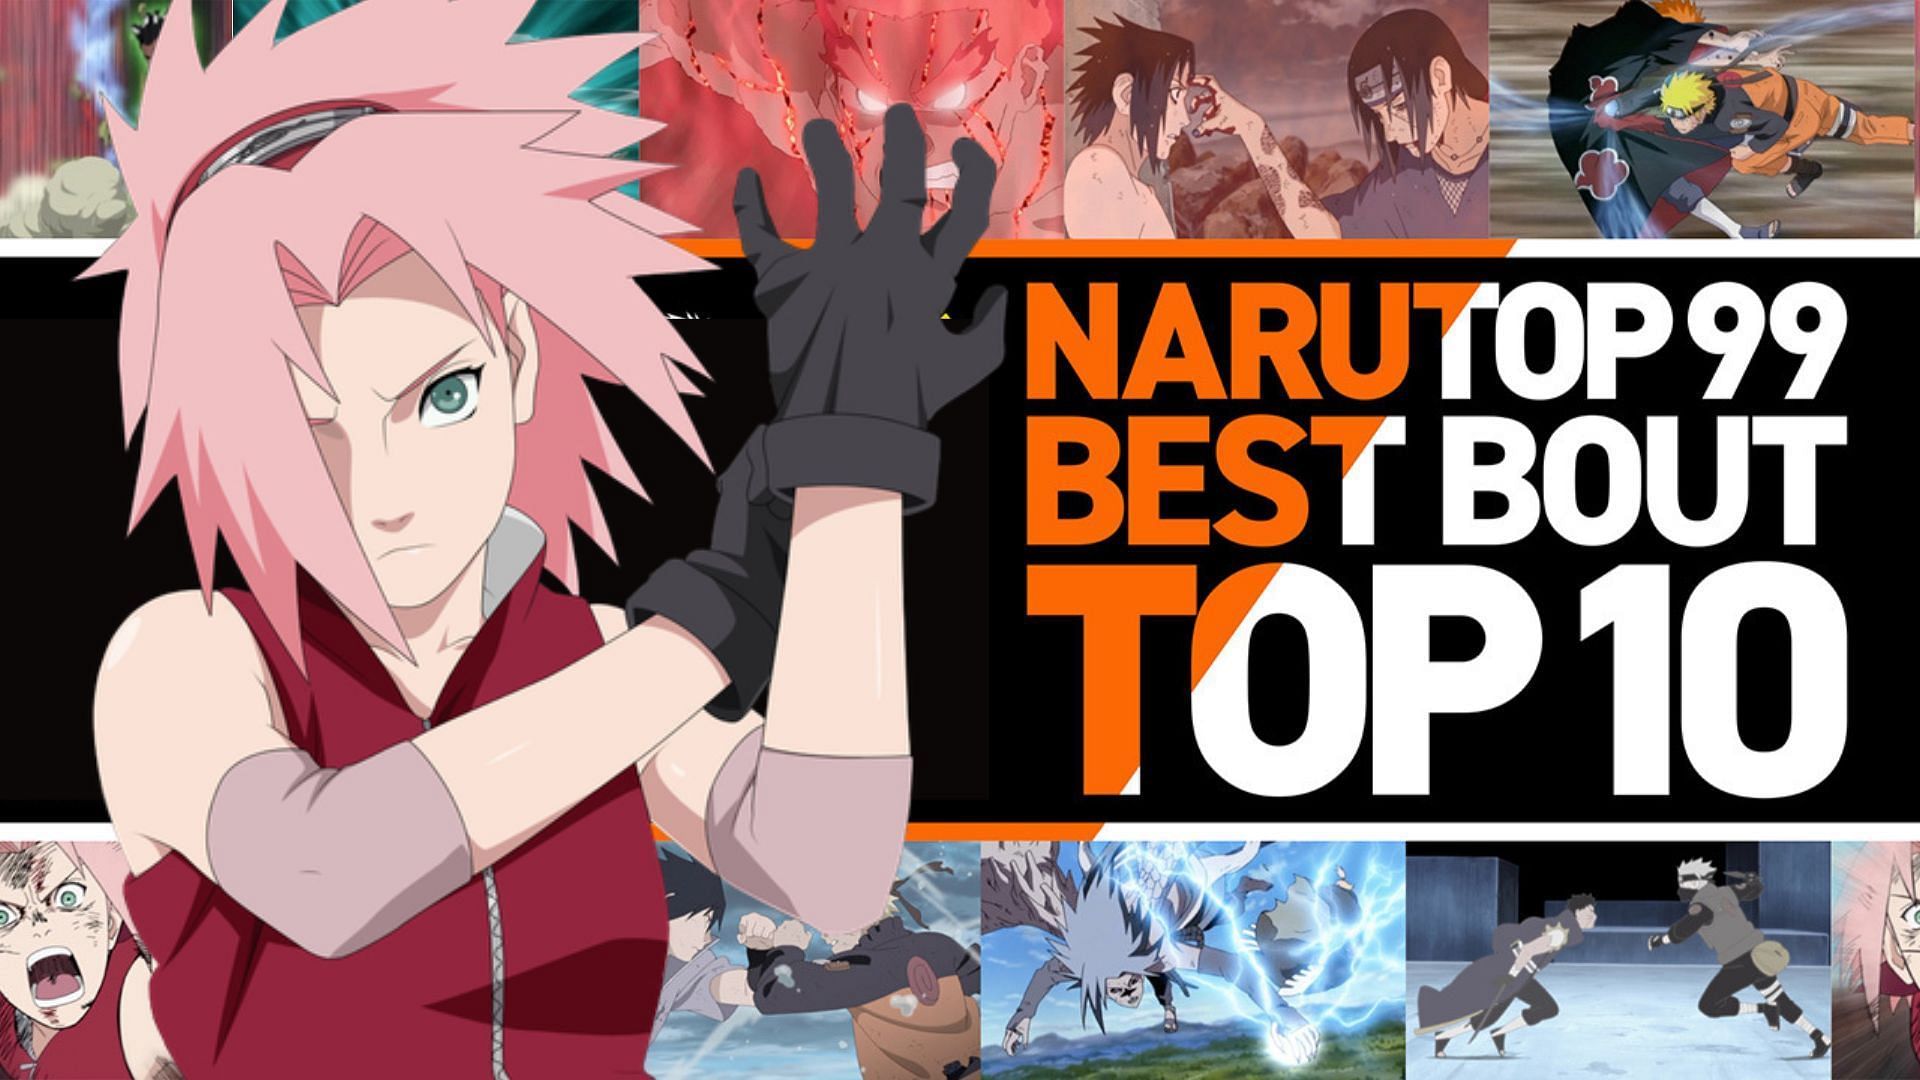 Super Naruto: Clash of Ninja! 4 - Naruto: Wiki of Ninja